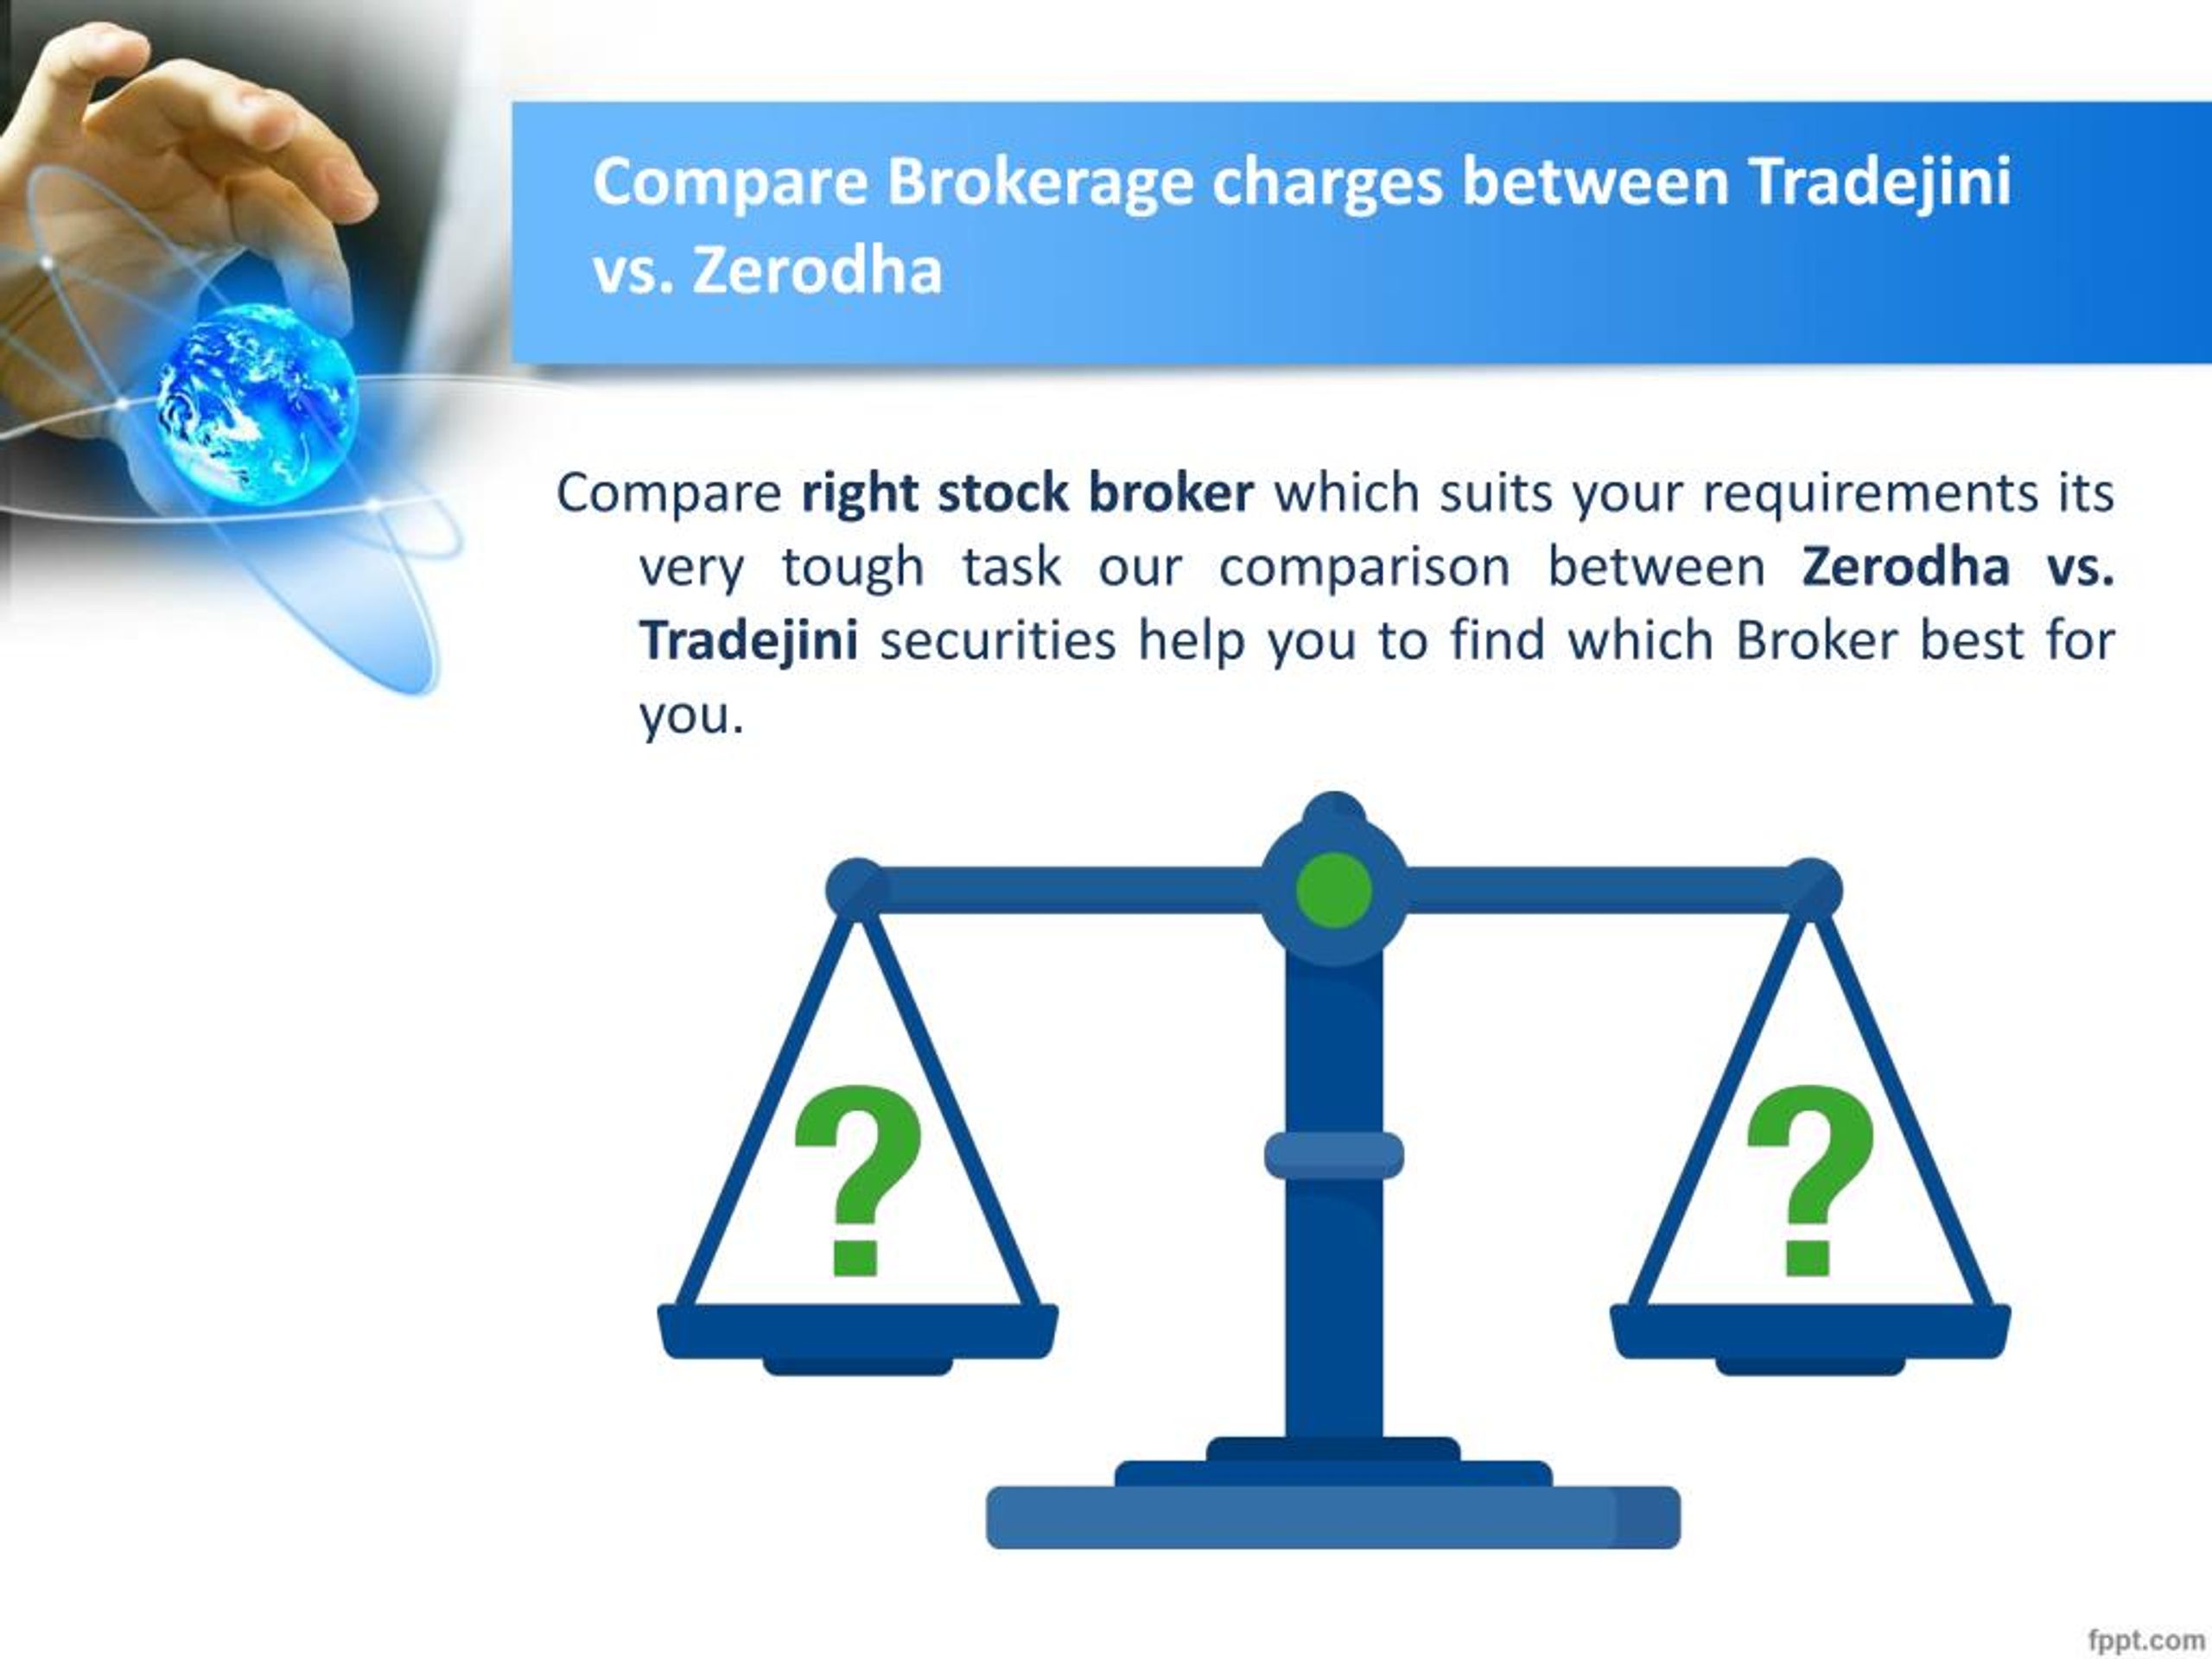 Ppt Compare Zerodha Vs Tradejini Brokerage Charges Investallign Powerpoint Presentation Id 9445